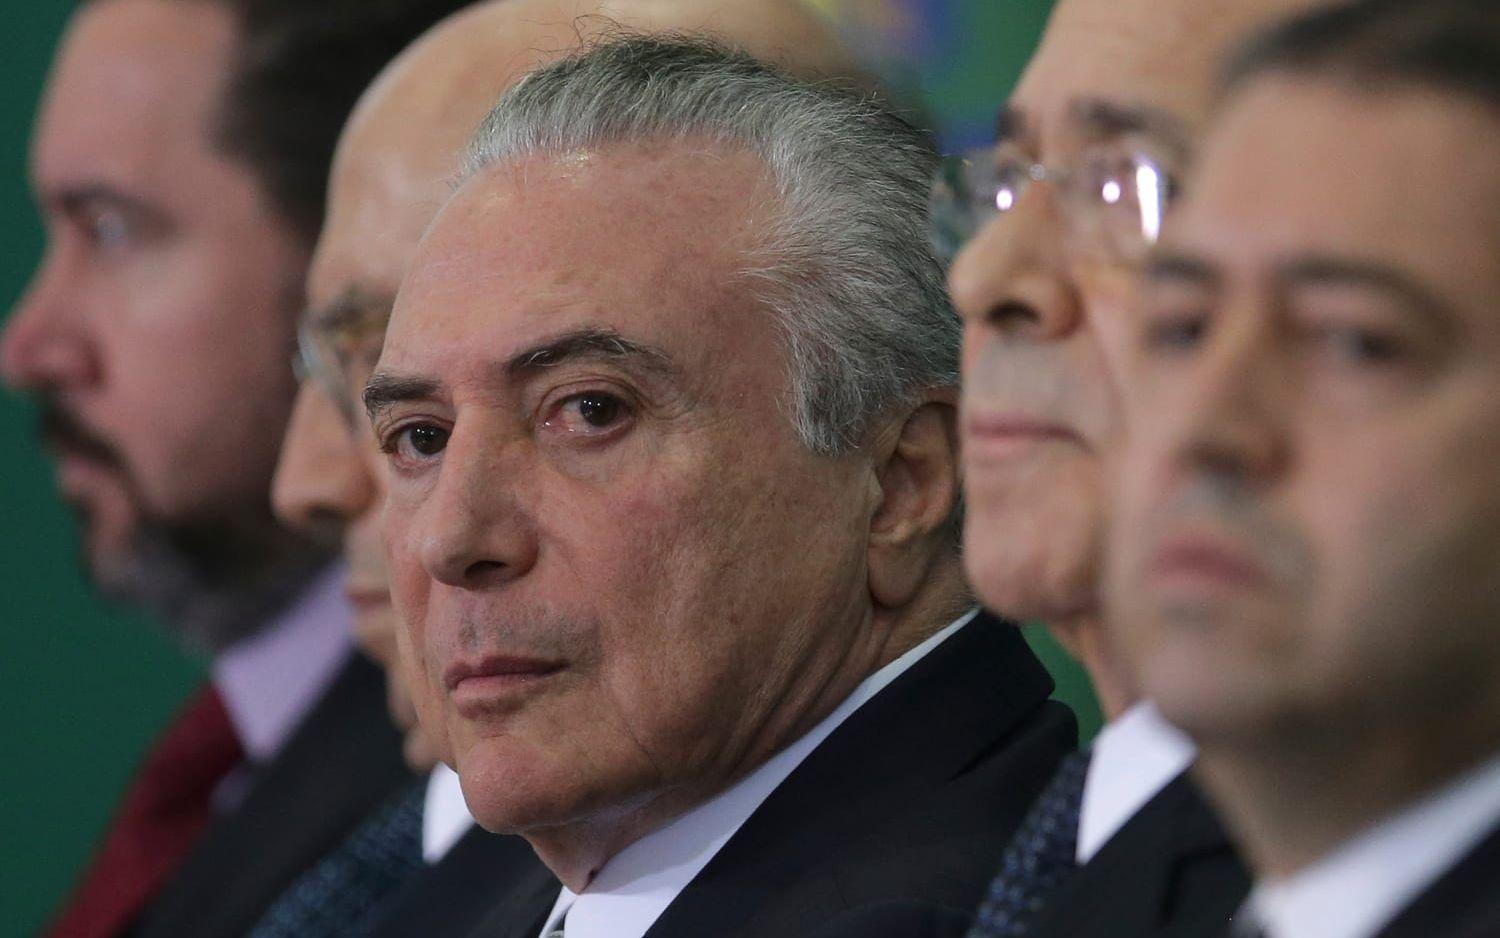 <strong>MICHEL TEMER,</strong> president i Brasilien: 1 miljon kronor. Temer fick överta presidentposten sedan Dilma Rousseff avsattes. Han har en årslön på 1 miljon kronor.